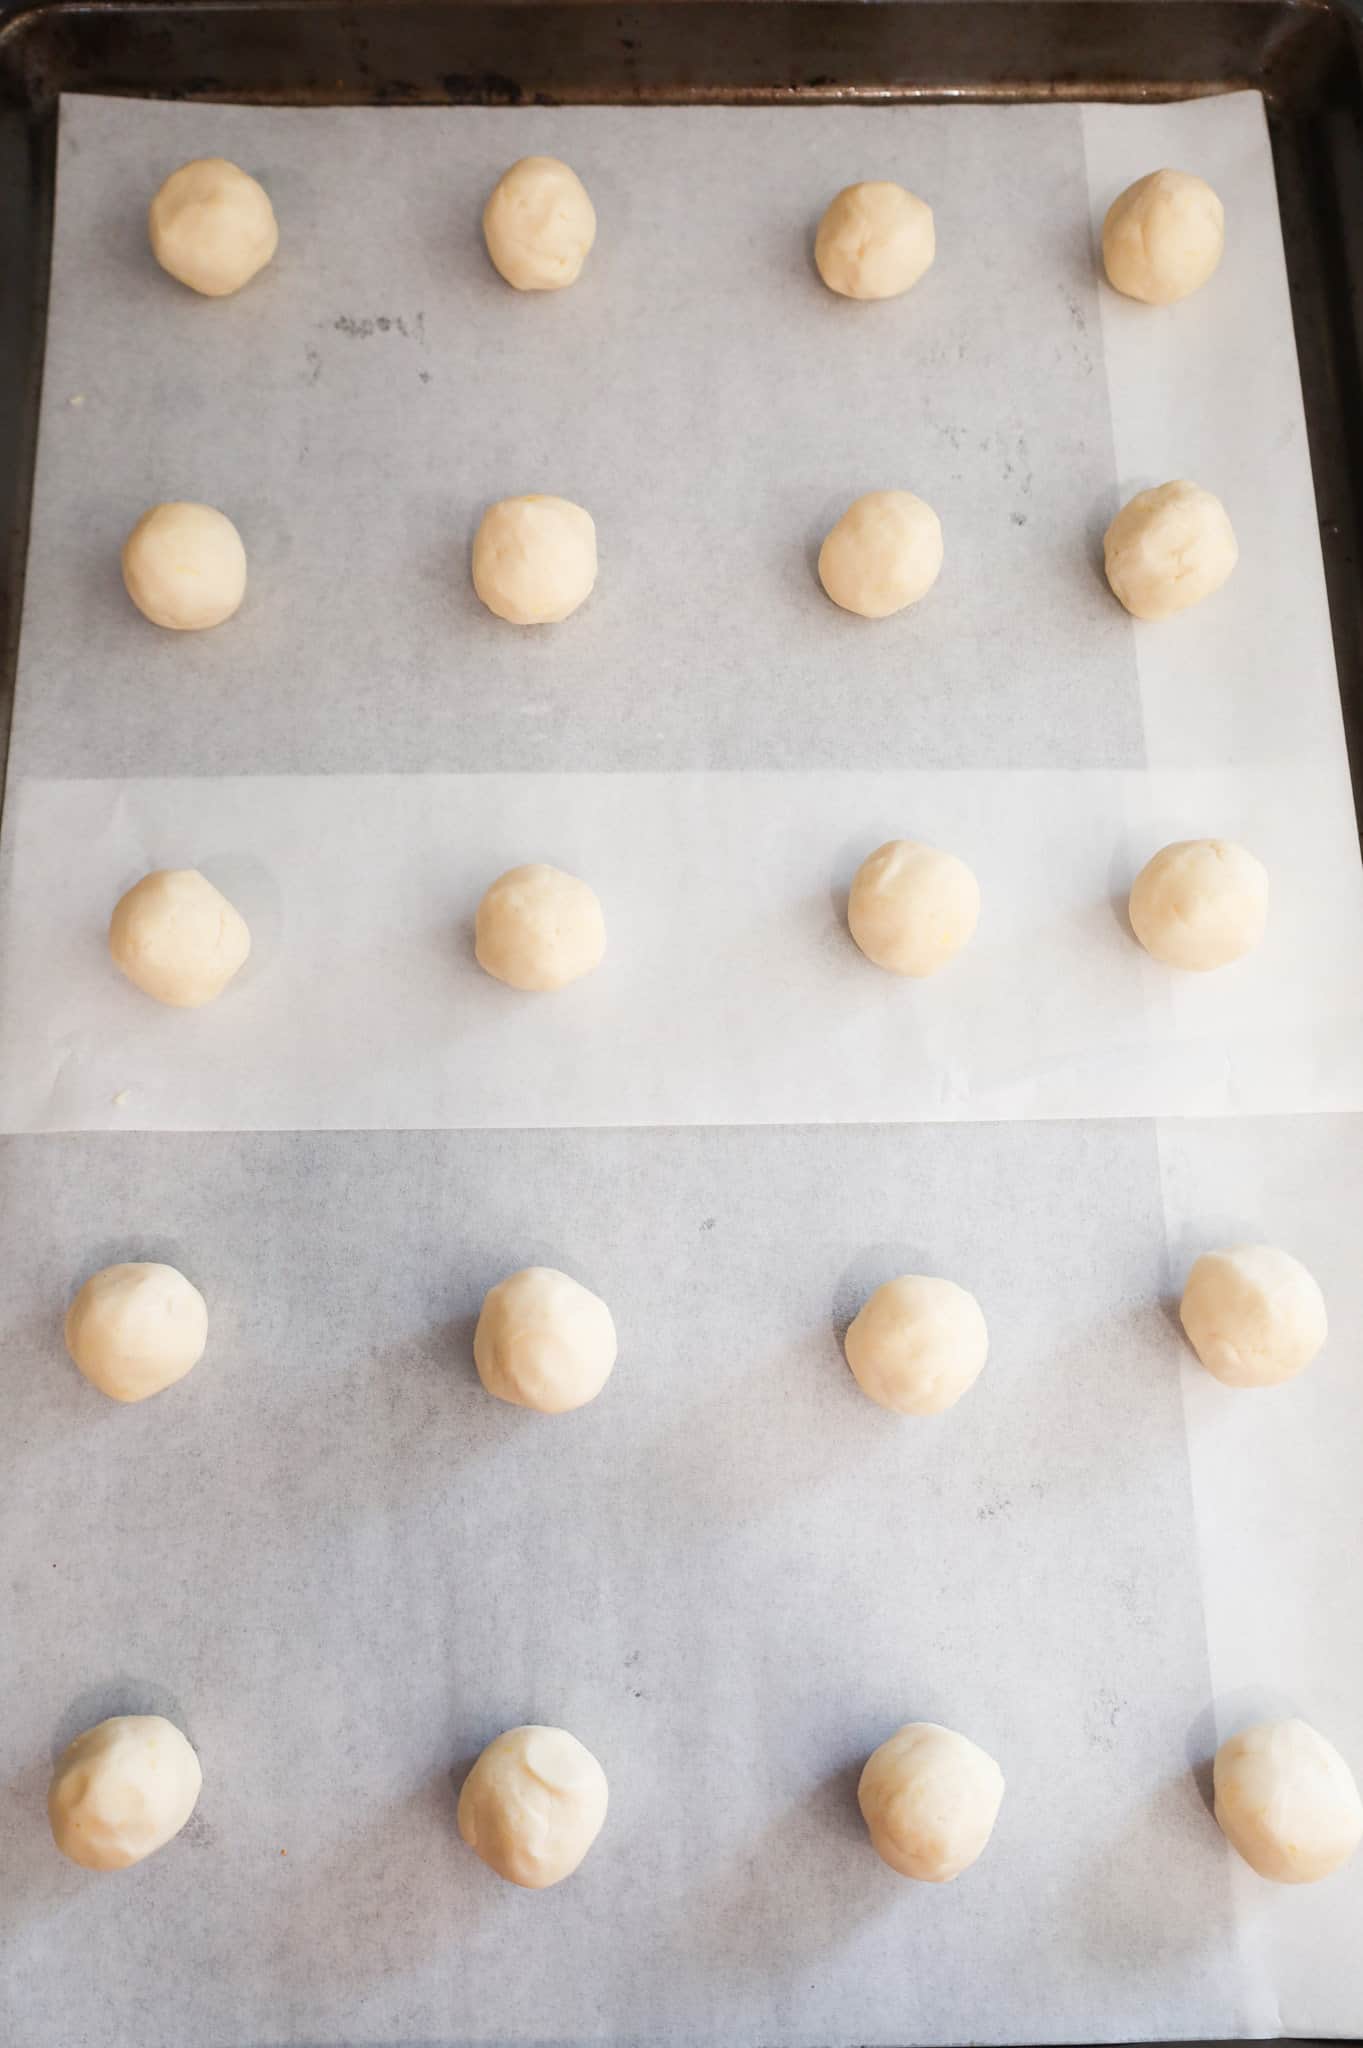 shortbread dough balls on a parchment lined baking sheet